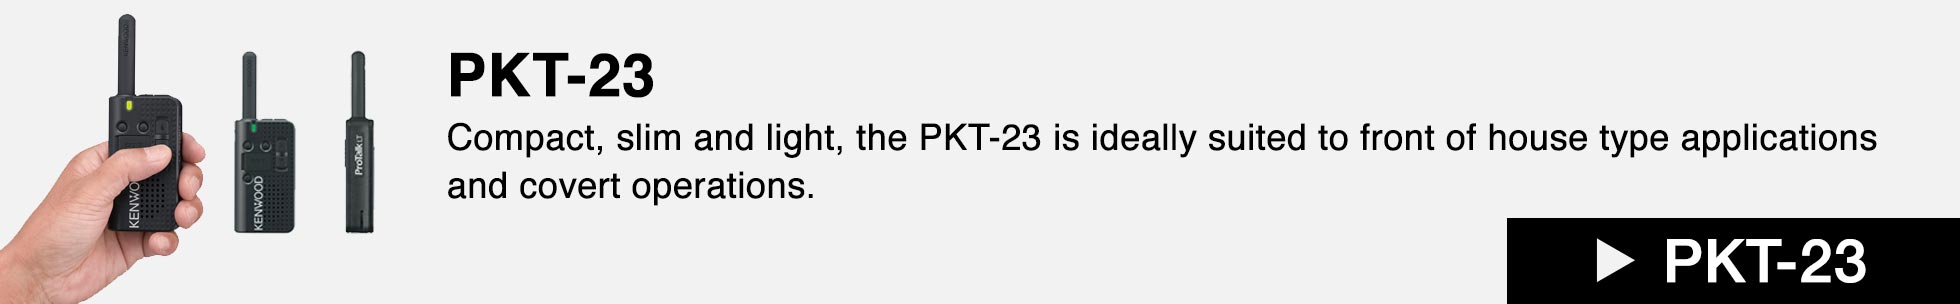 PKT-23T License-free two way radio